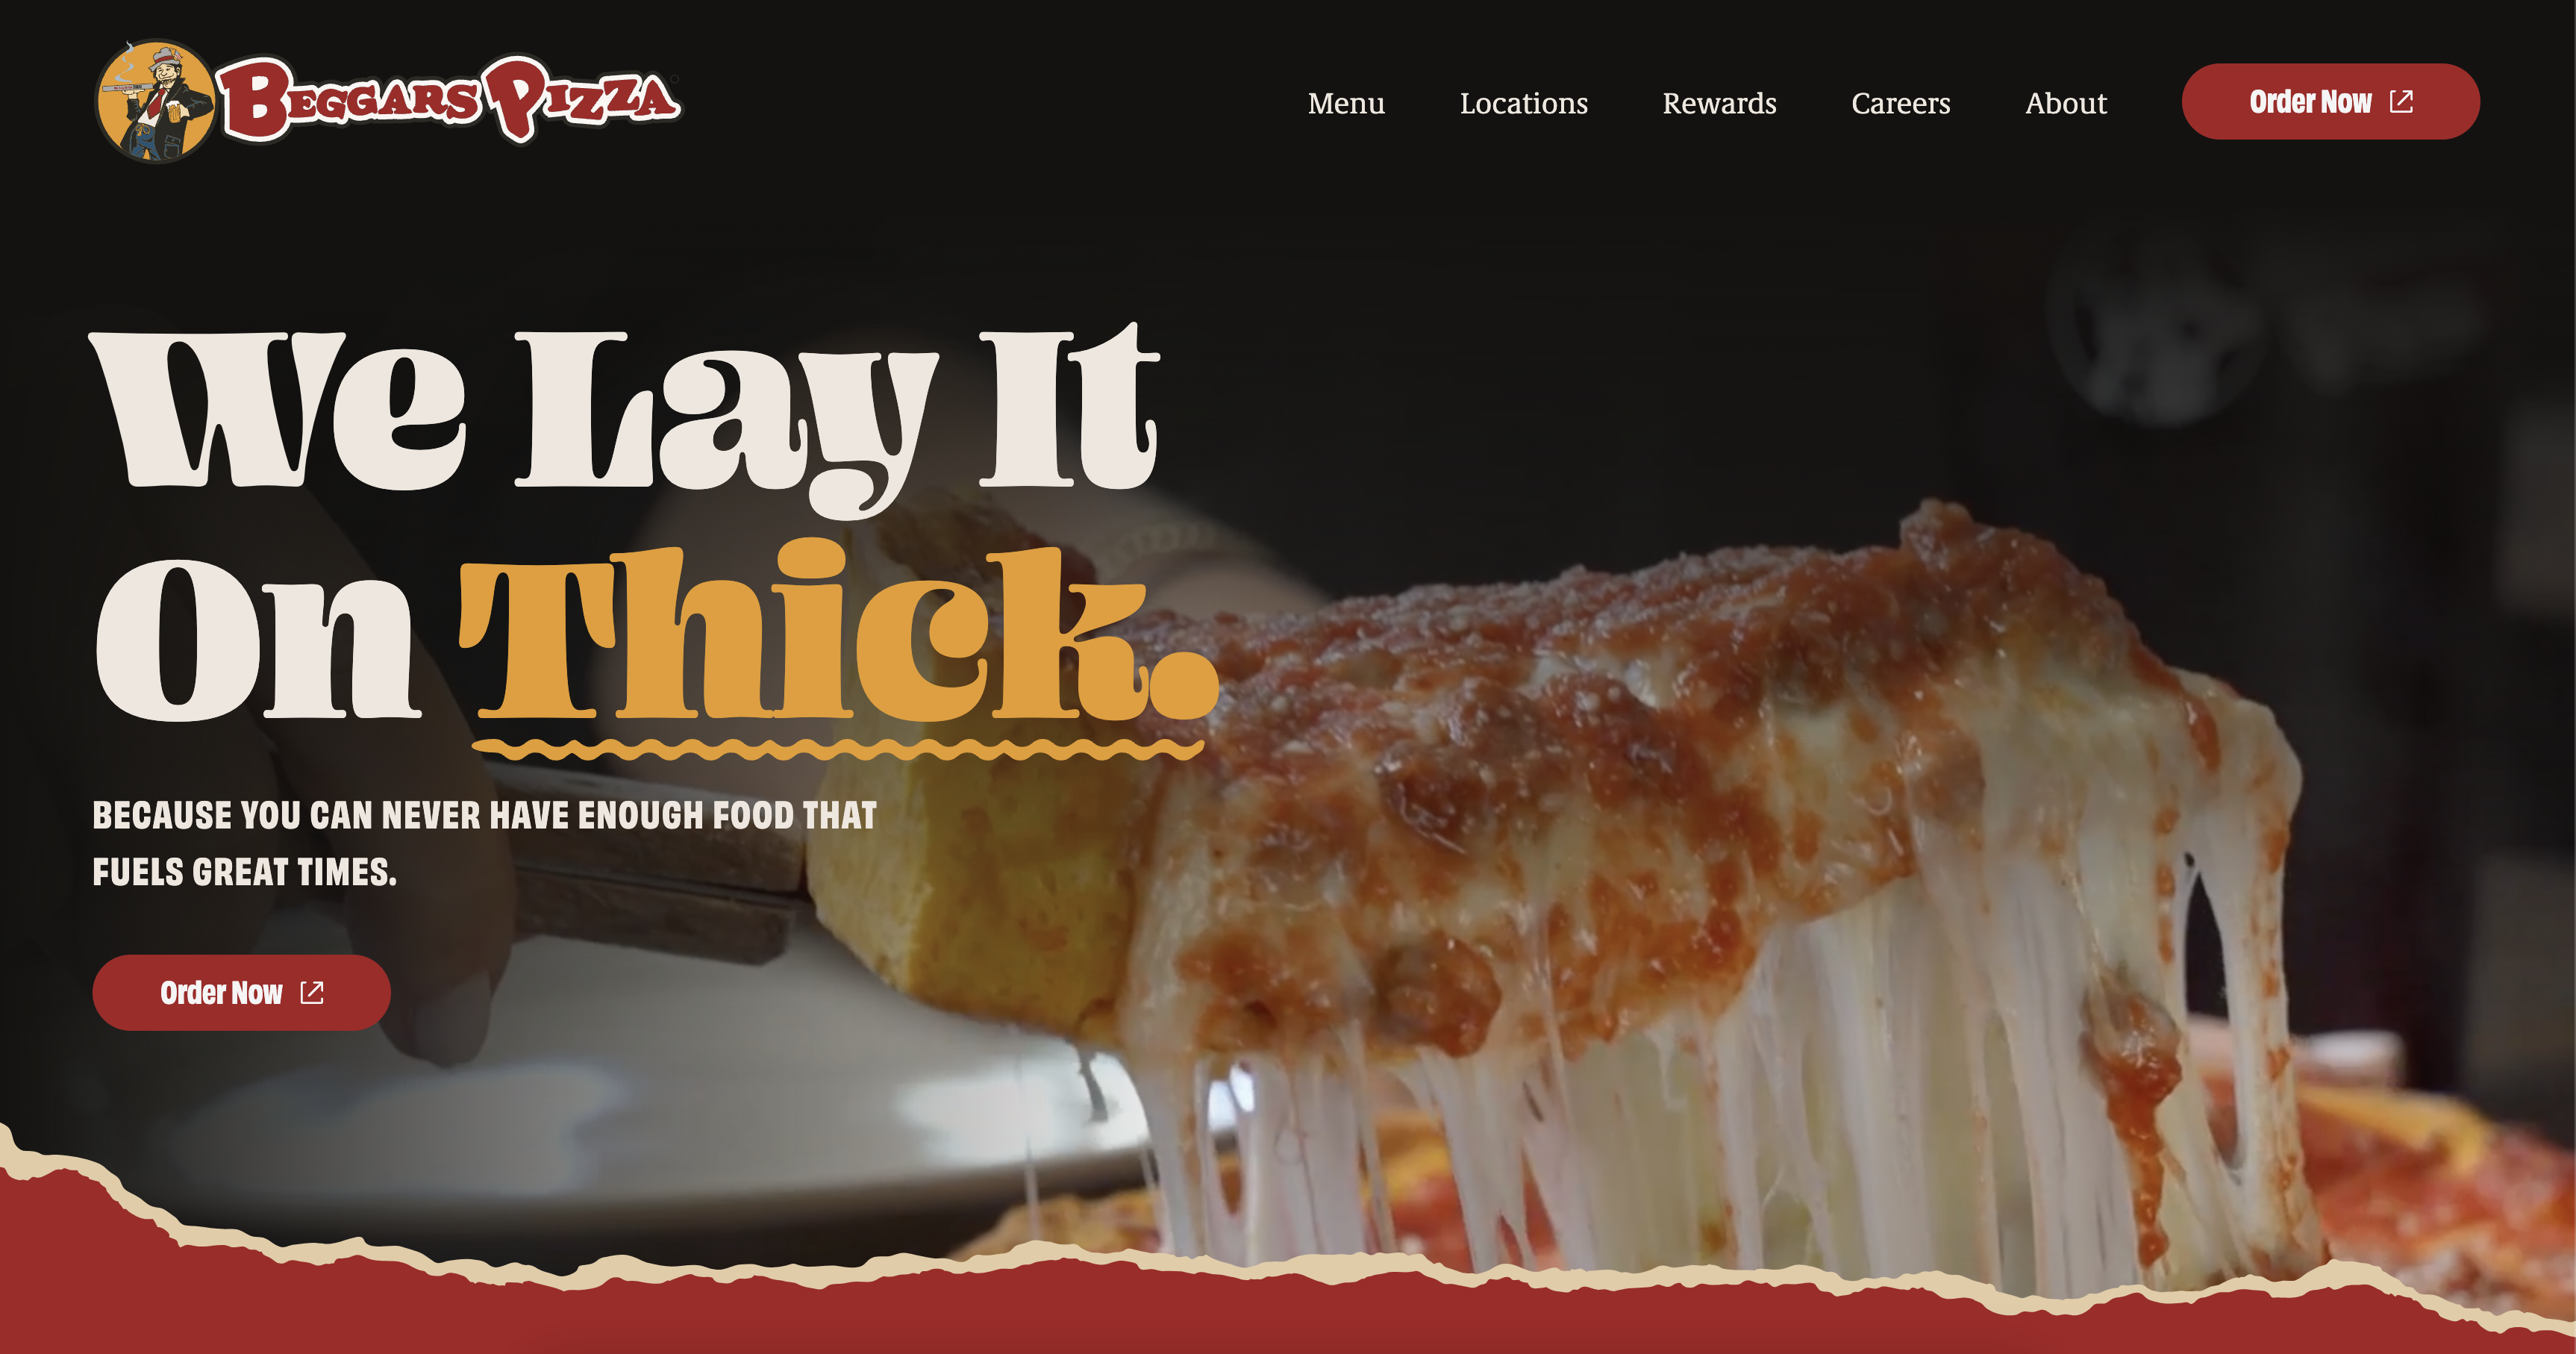 Beggars Pizza Homepage